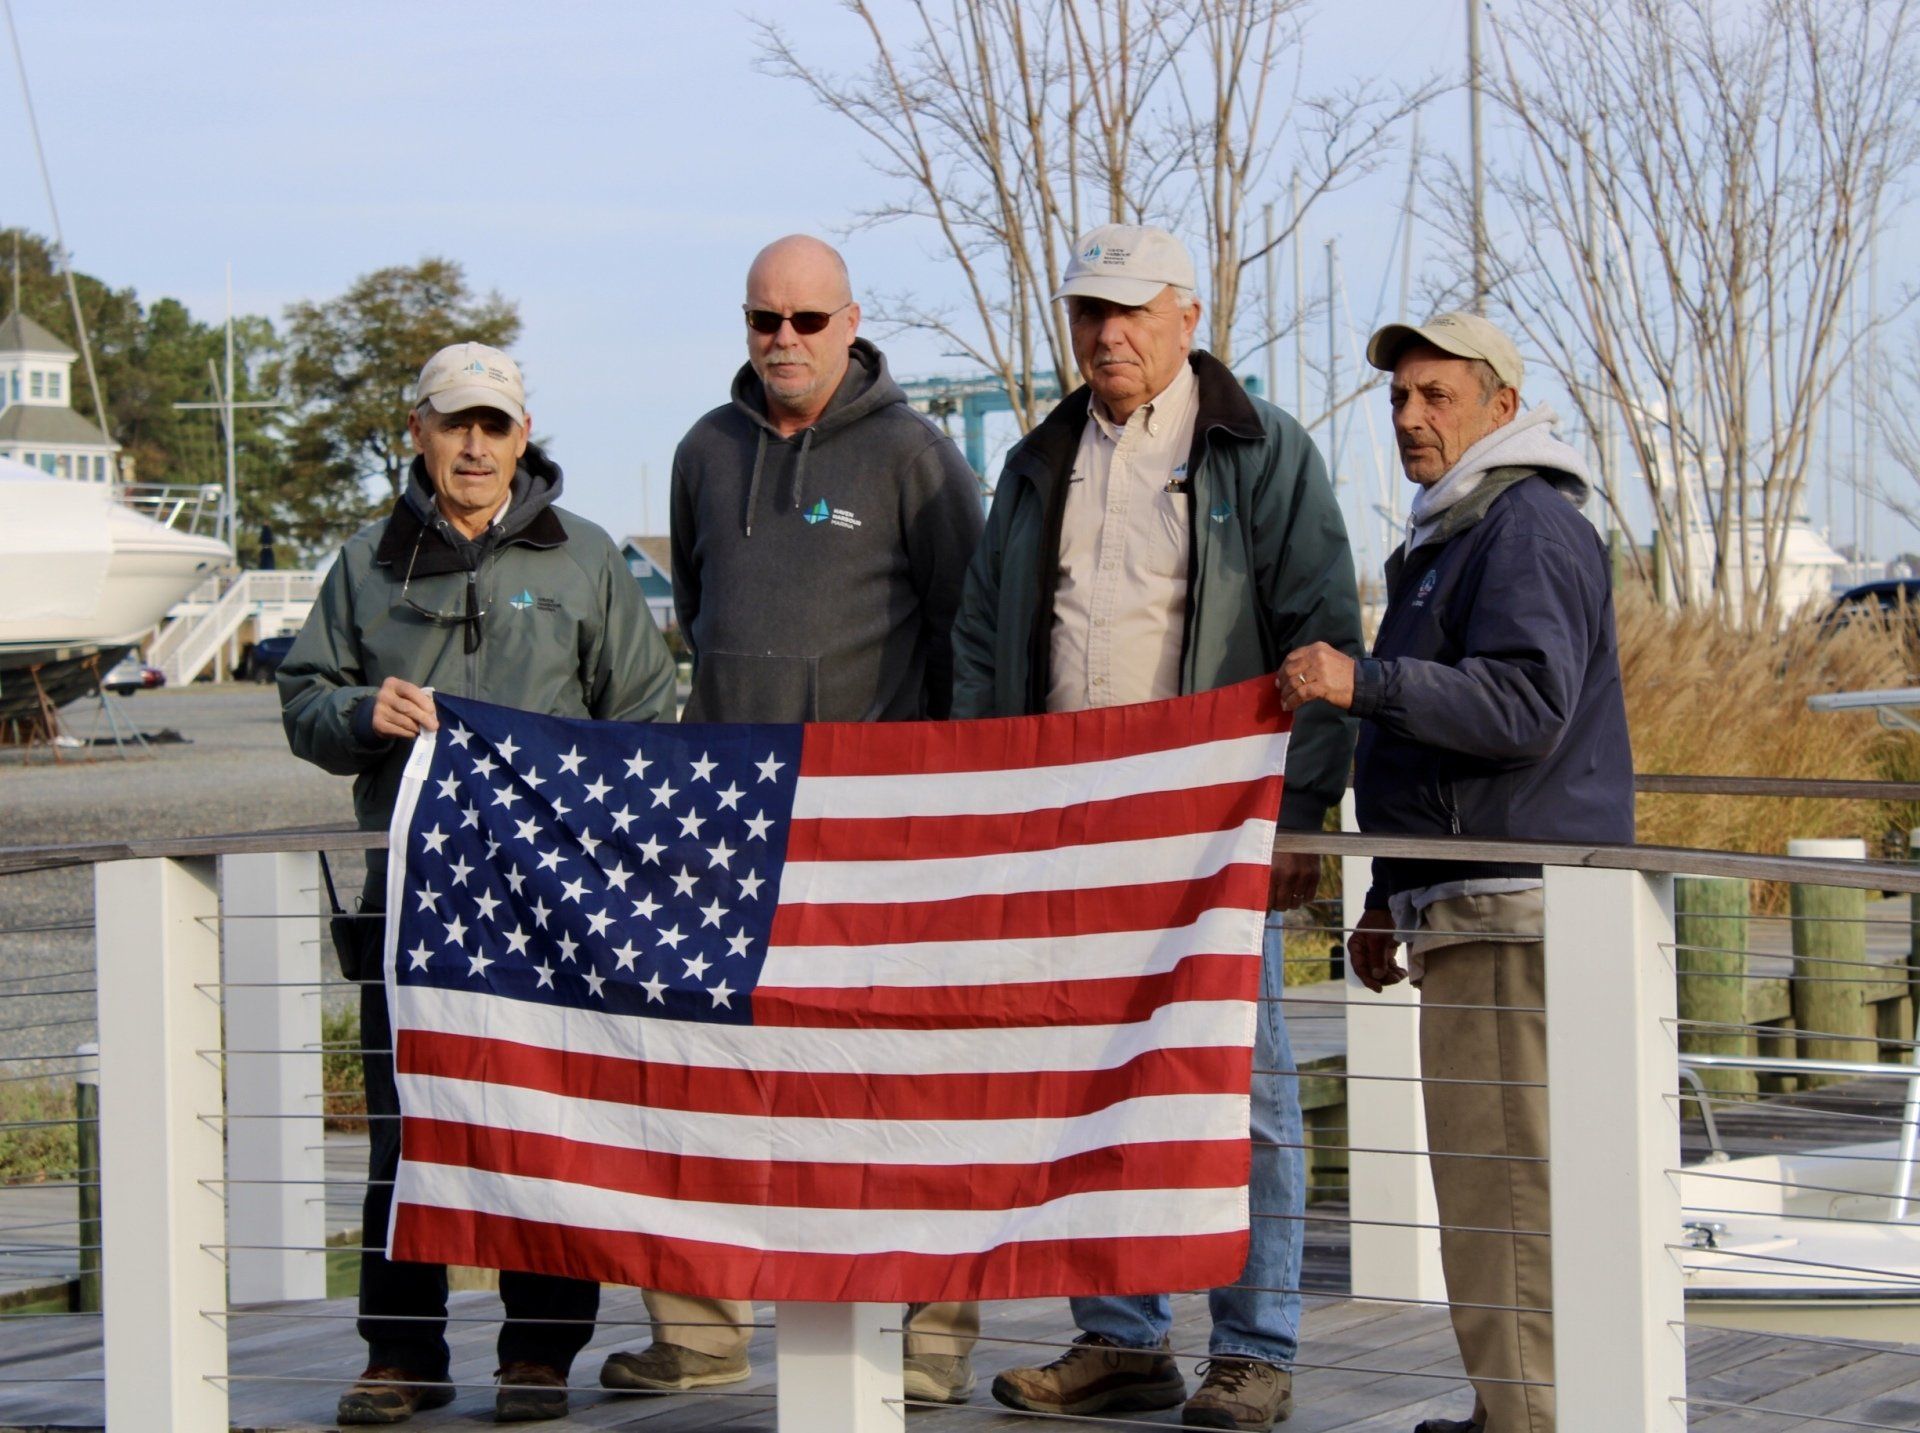 Veterans holding a United States flag